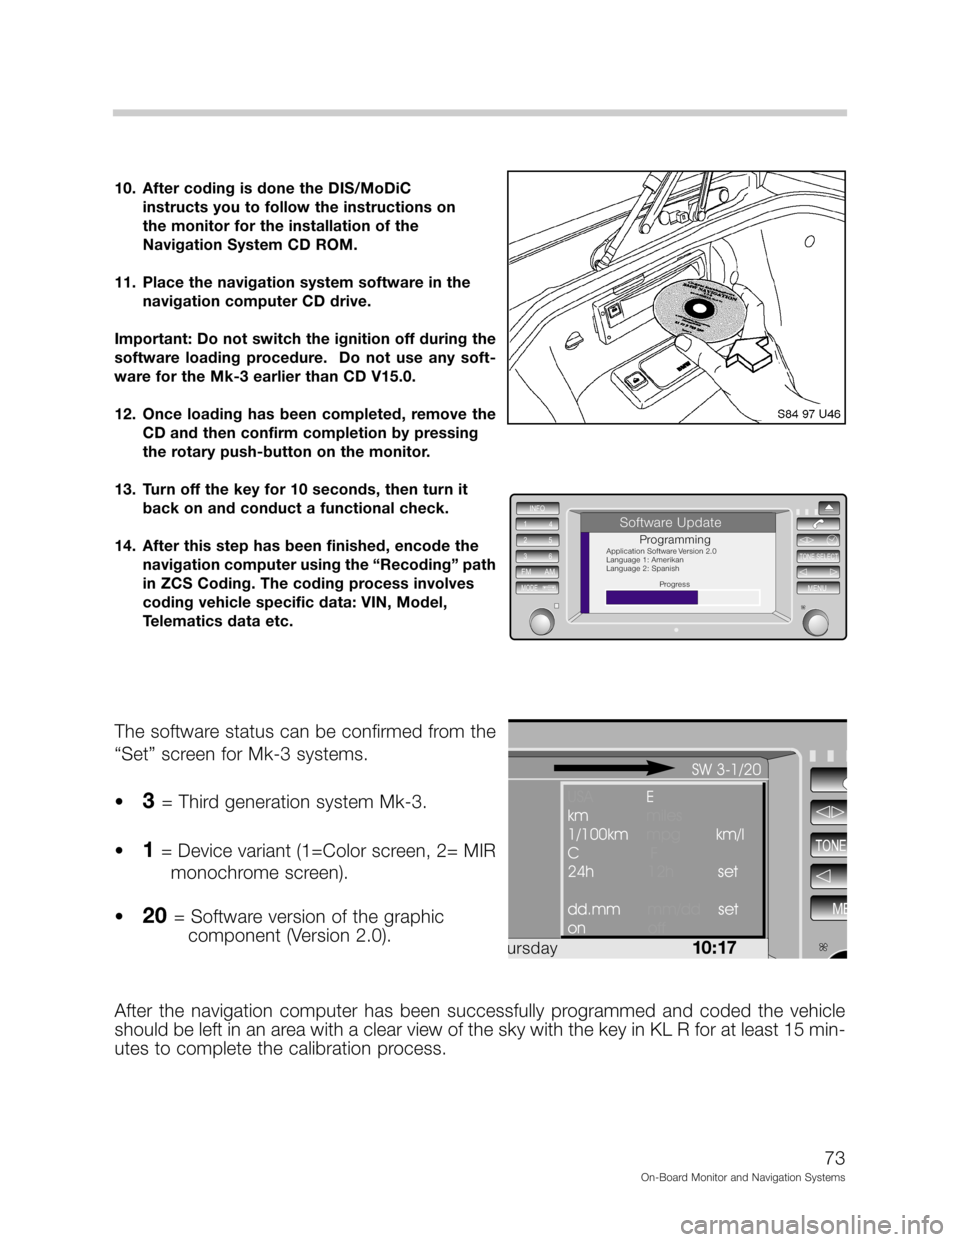 BMW 7 SERIES 1998 E38 On Board Monitor System Manual PDF ,.



"&
(	
#%) 6 !1 !&
=	 2
 !-67& ! !!
&.! 6& !"" !6&
", 1" !-.2	)
##) 